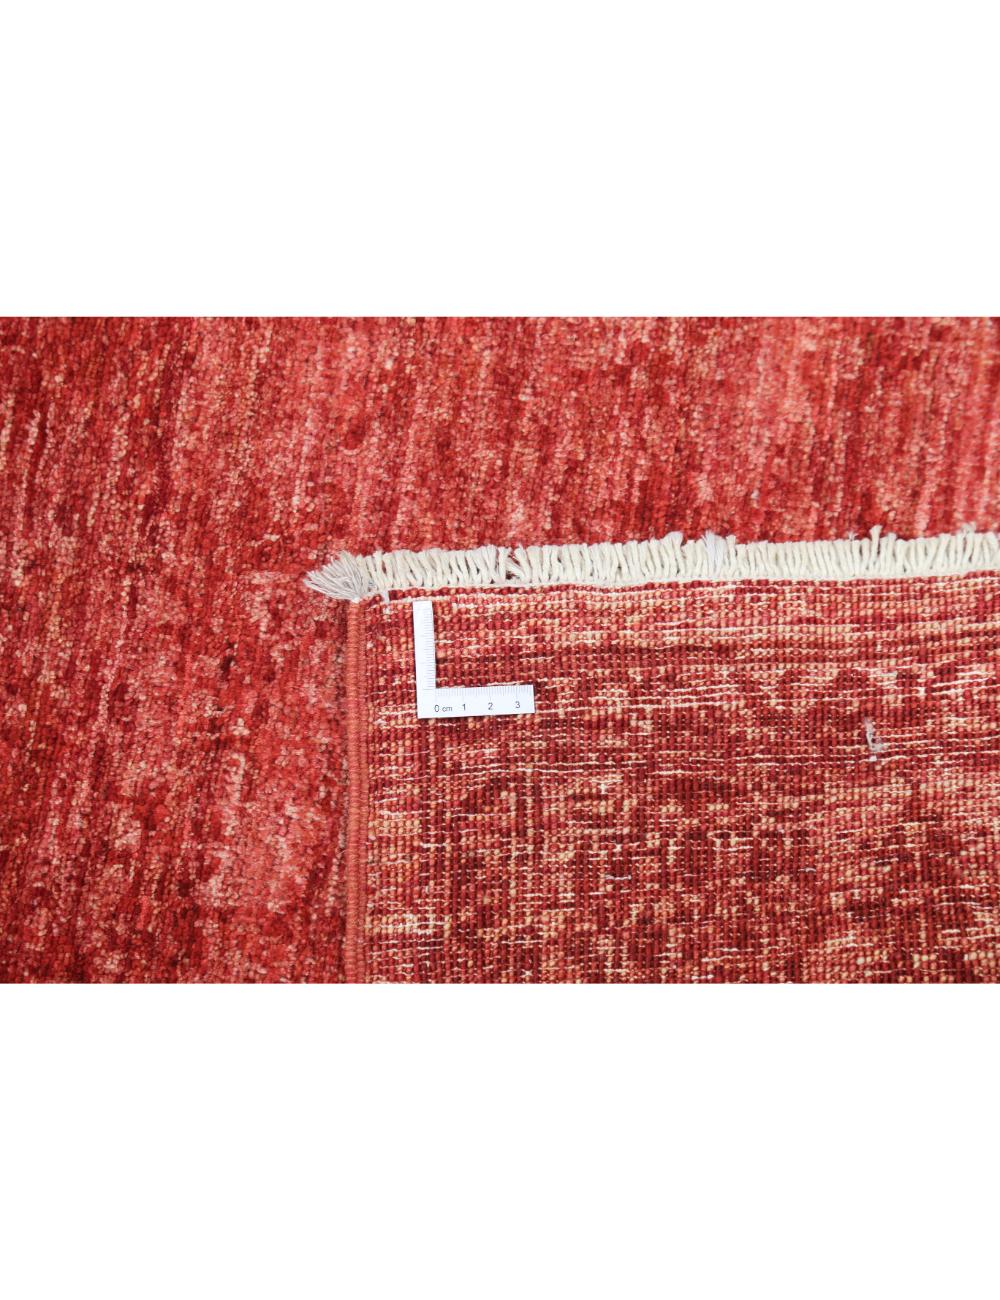 Hand Knotted Ziegler Farhan Wool Rug - 3'10'' x 5'10'' Arteverk Arteverk Rugs